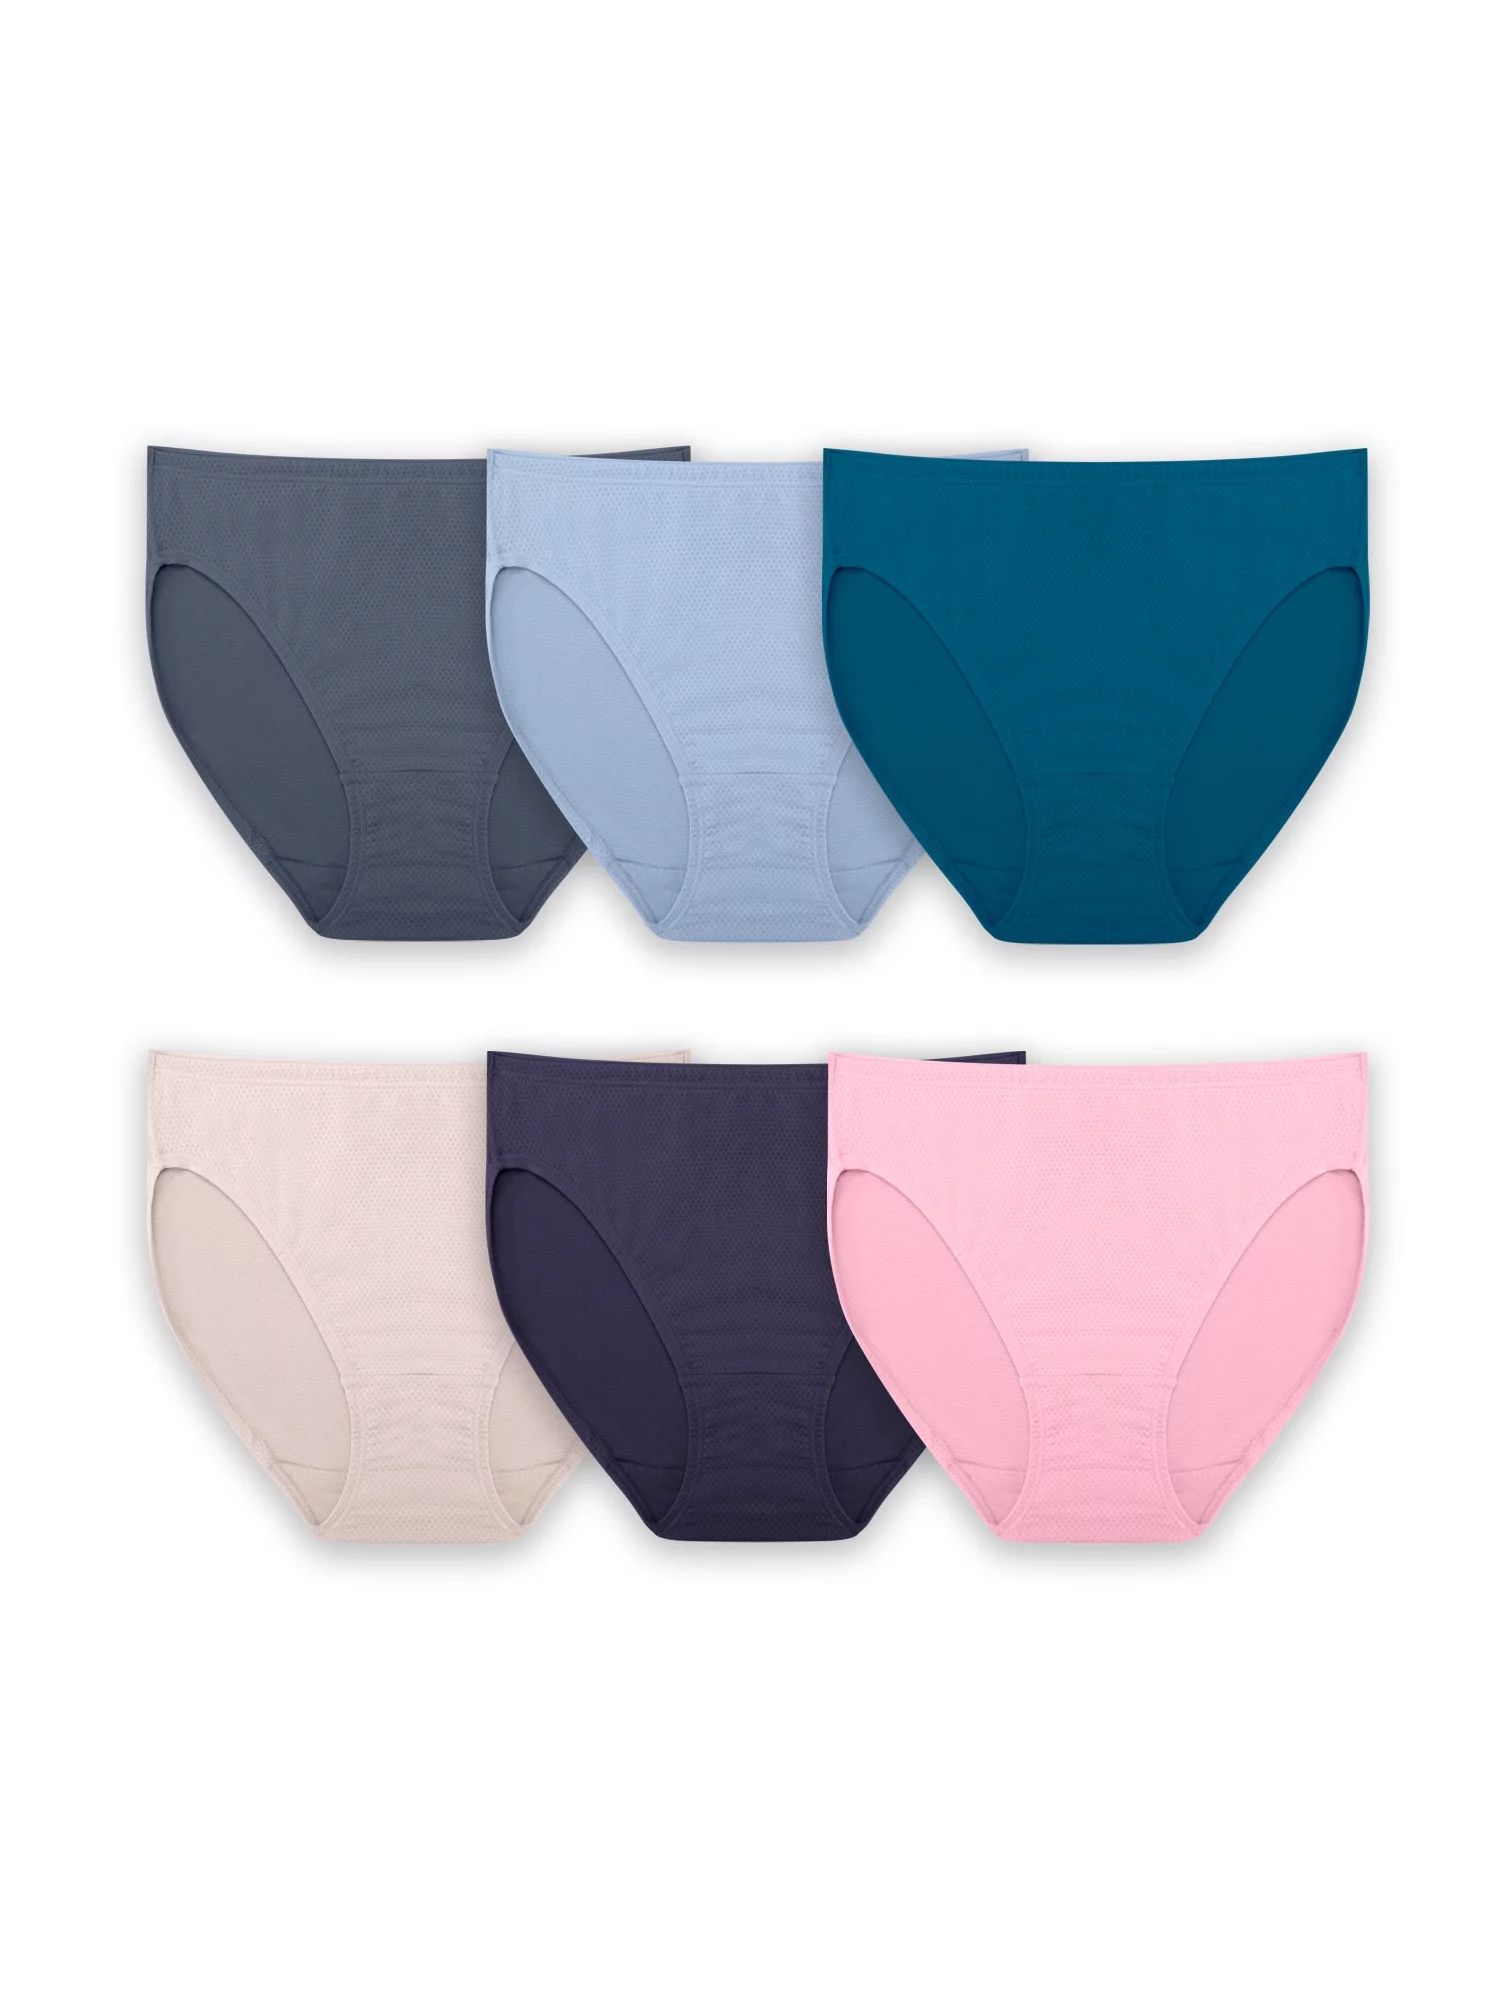 Fruit of the Loom Women's Breathable Micro-Mesh Hi Cut Underwear, 6 Pack, Sizes M-3XL | Walmart (US)